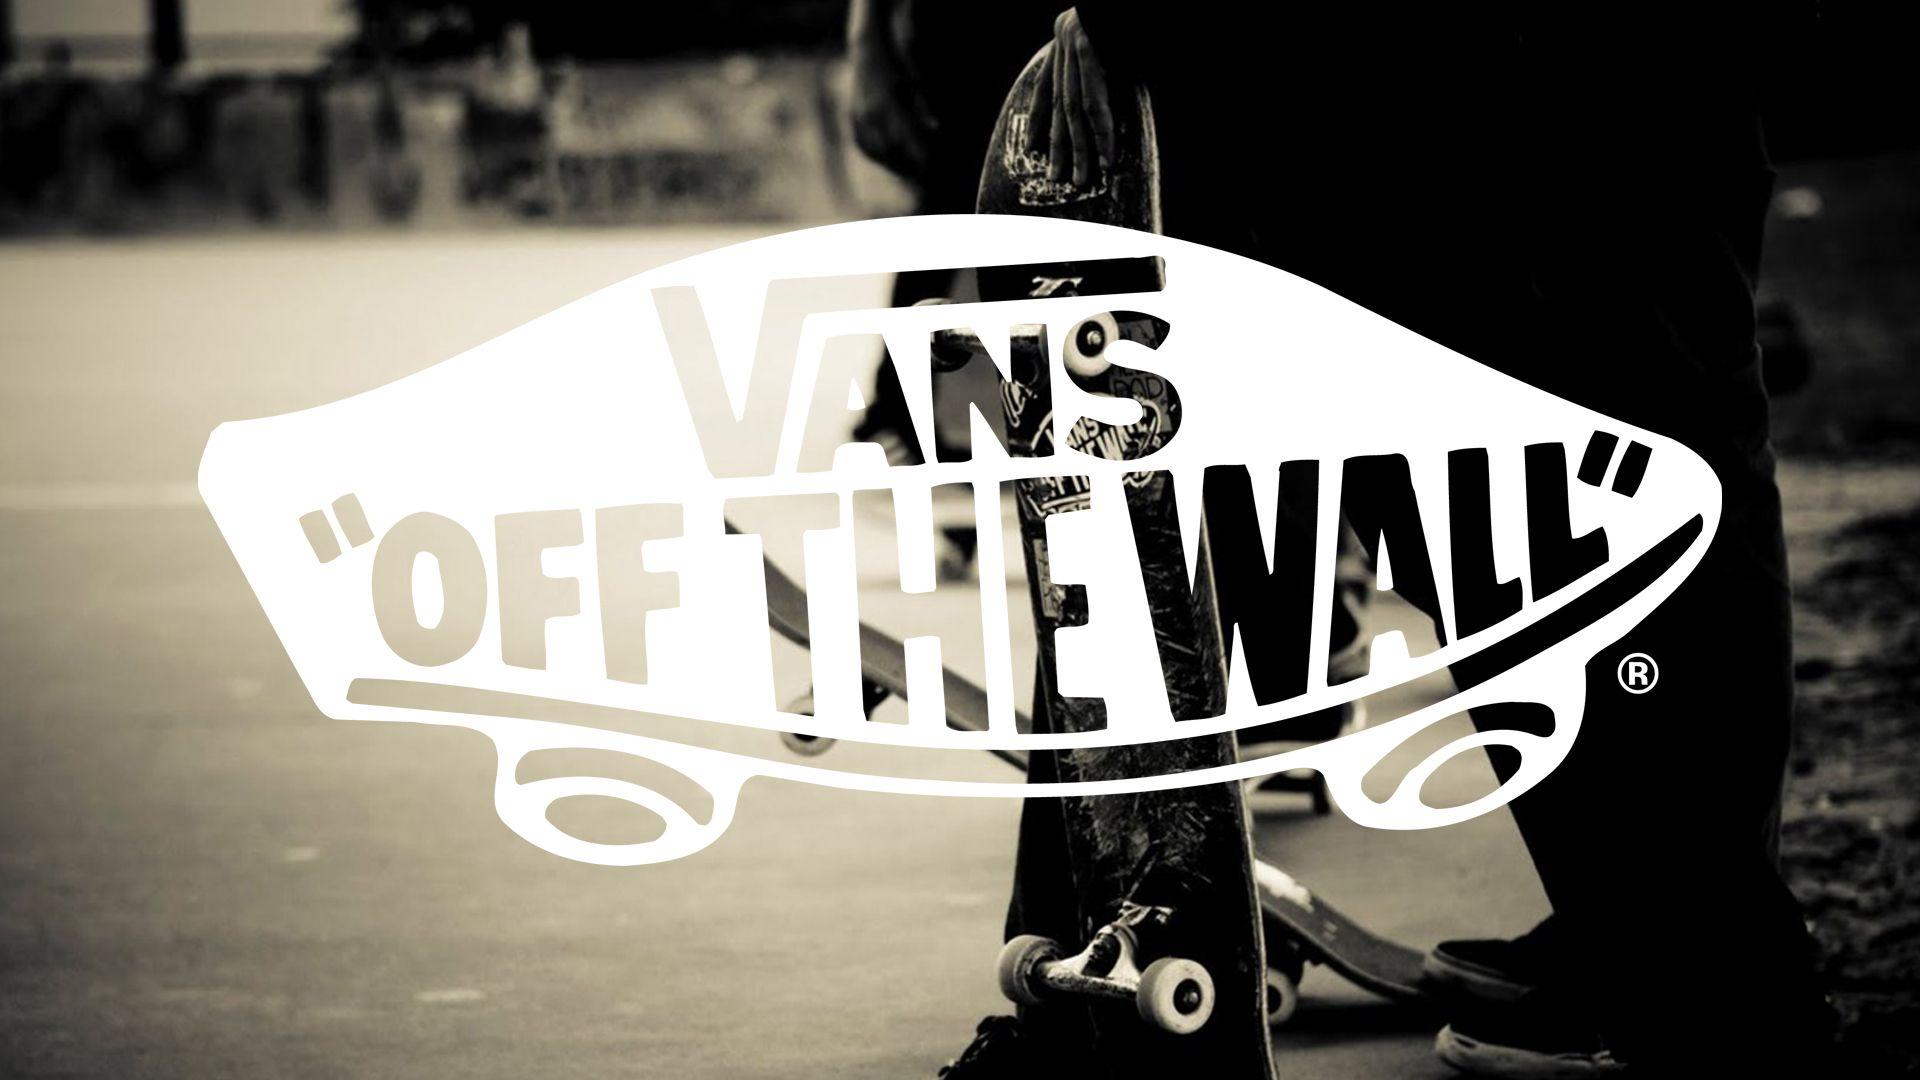 skateboard vans wallpaper hd